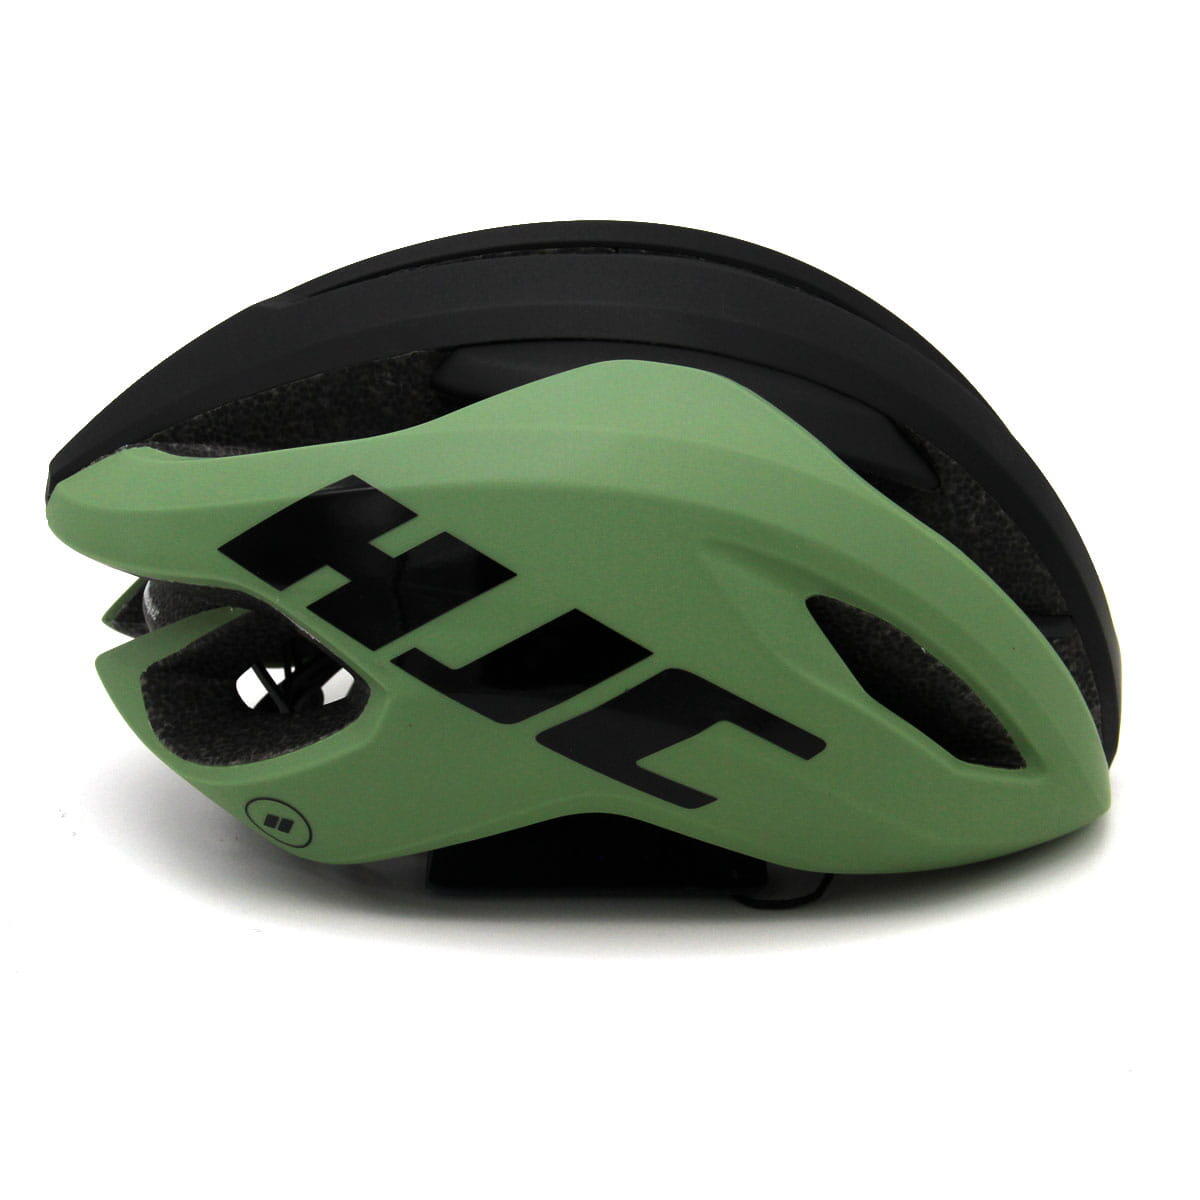 HJC HJC Veleco: Streamlined, Comfy Helmet for Road Cycling